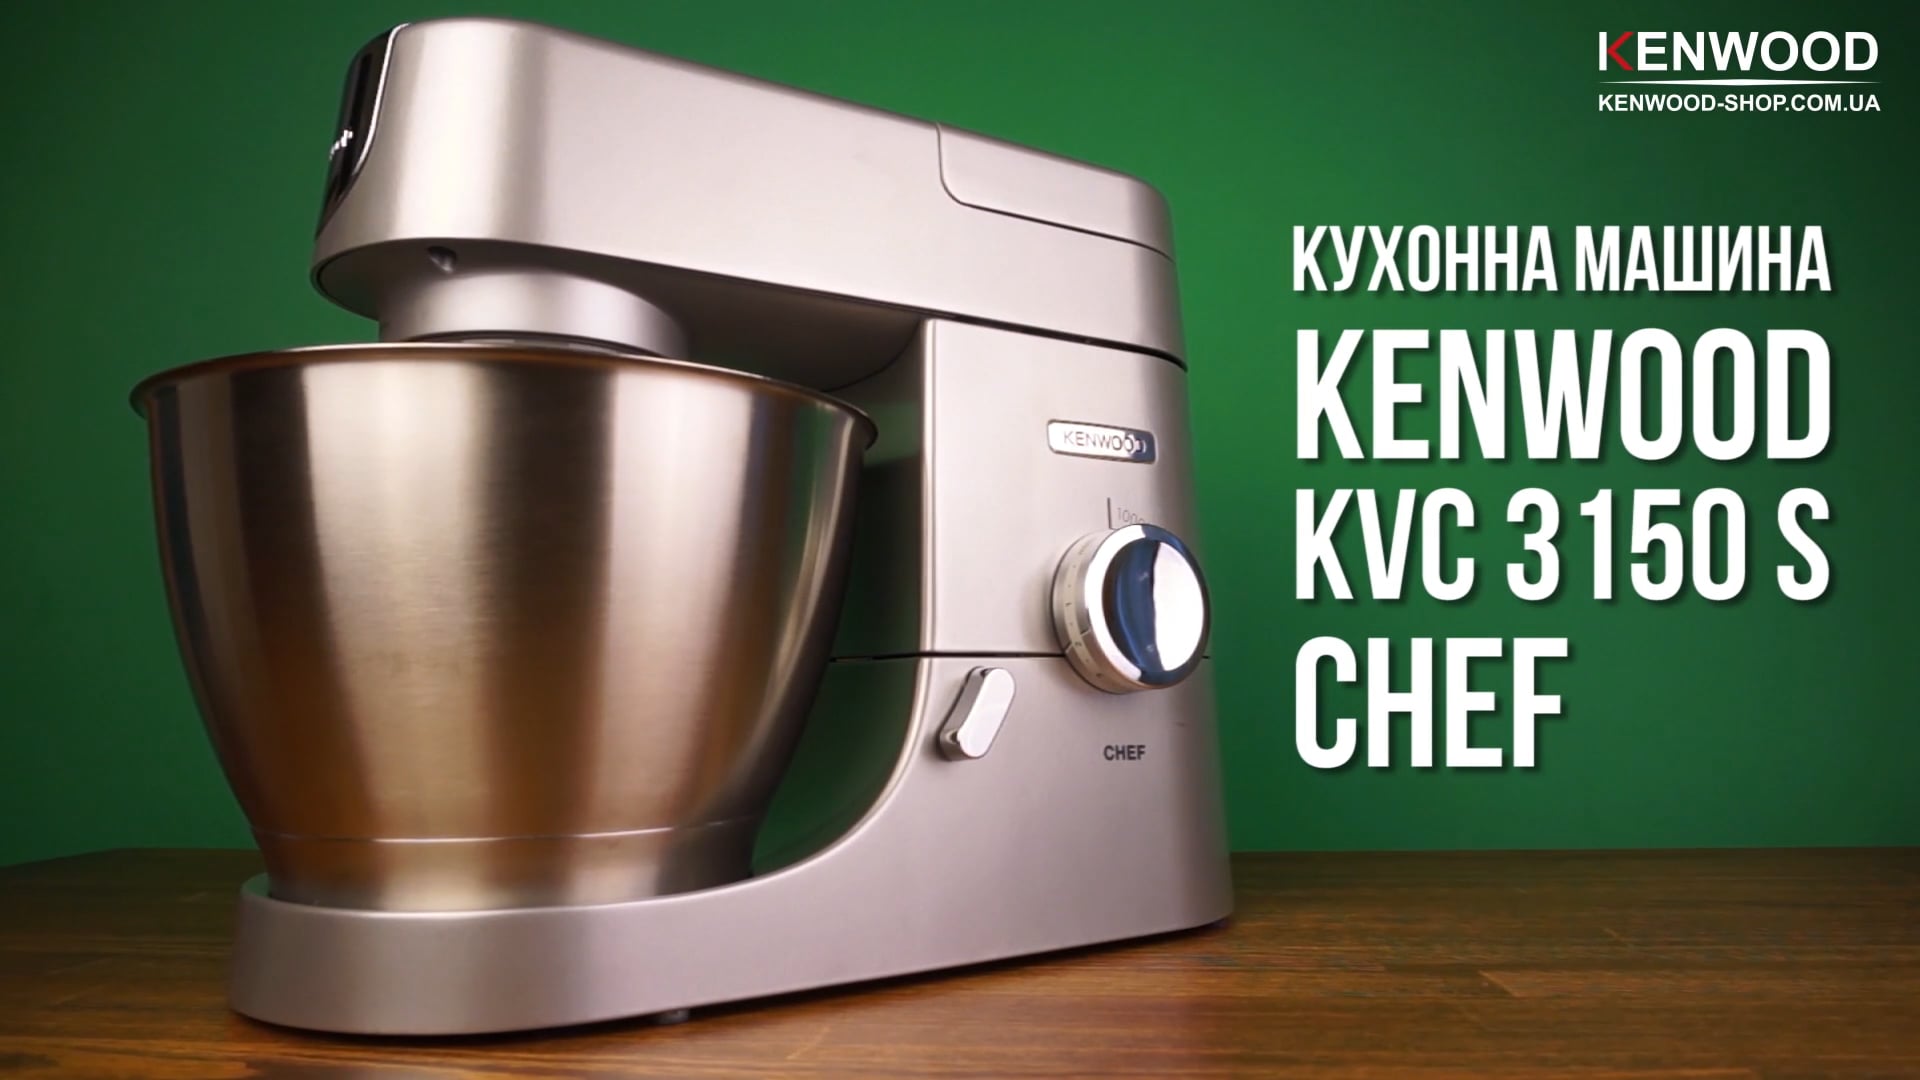 Кухонная машина видео